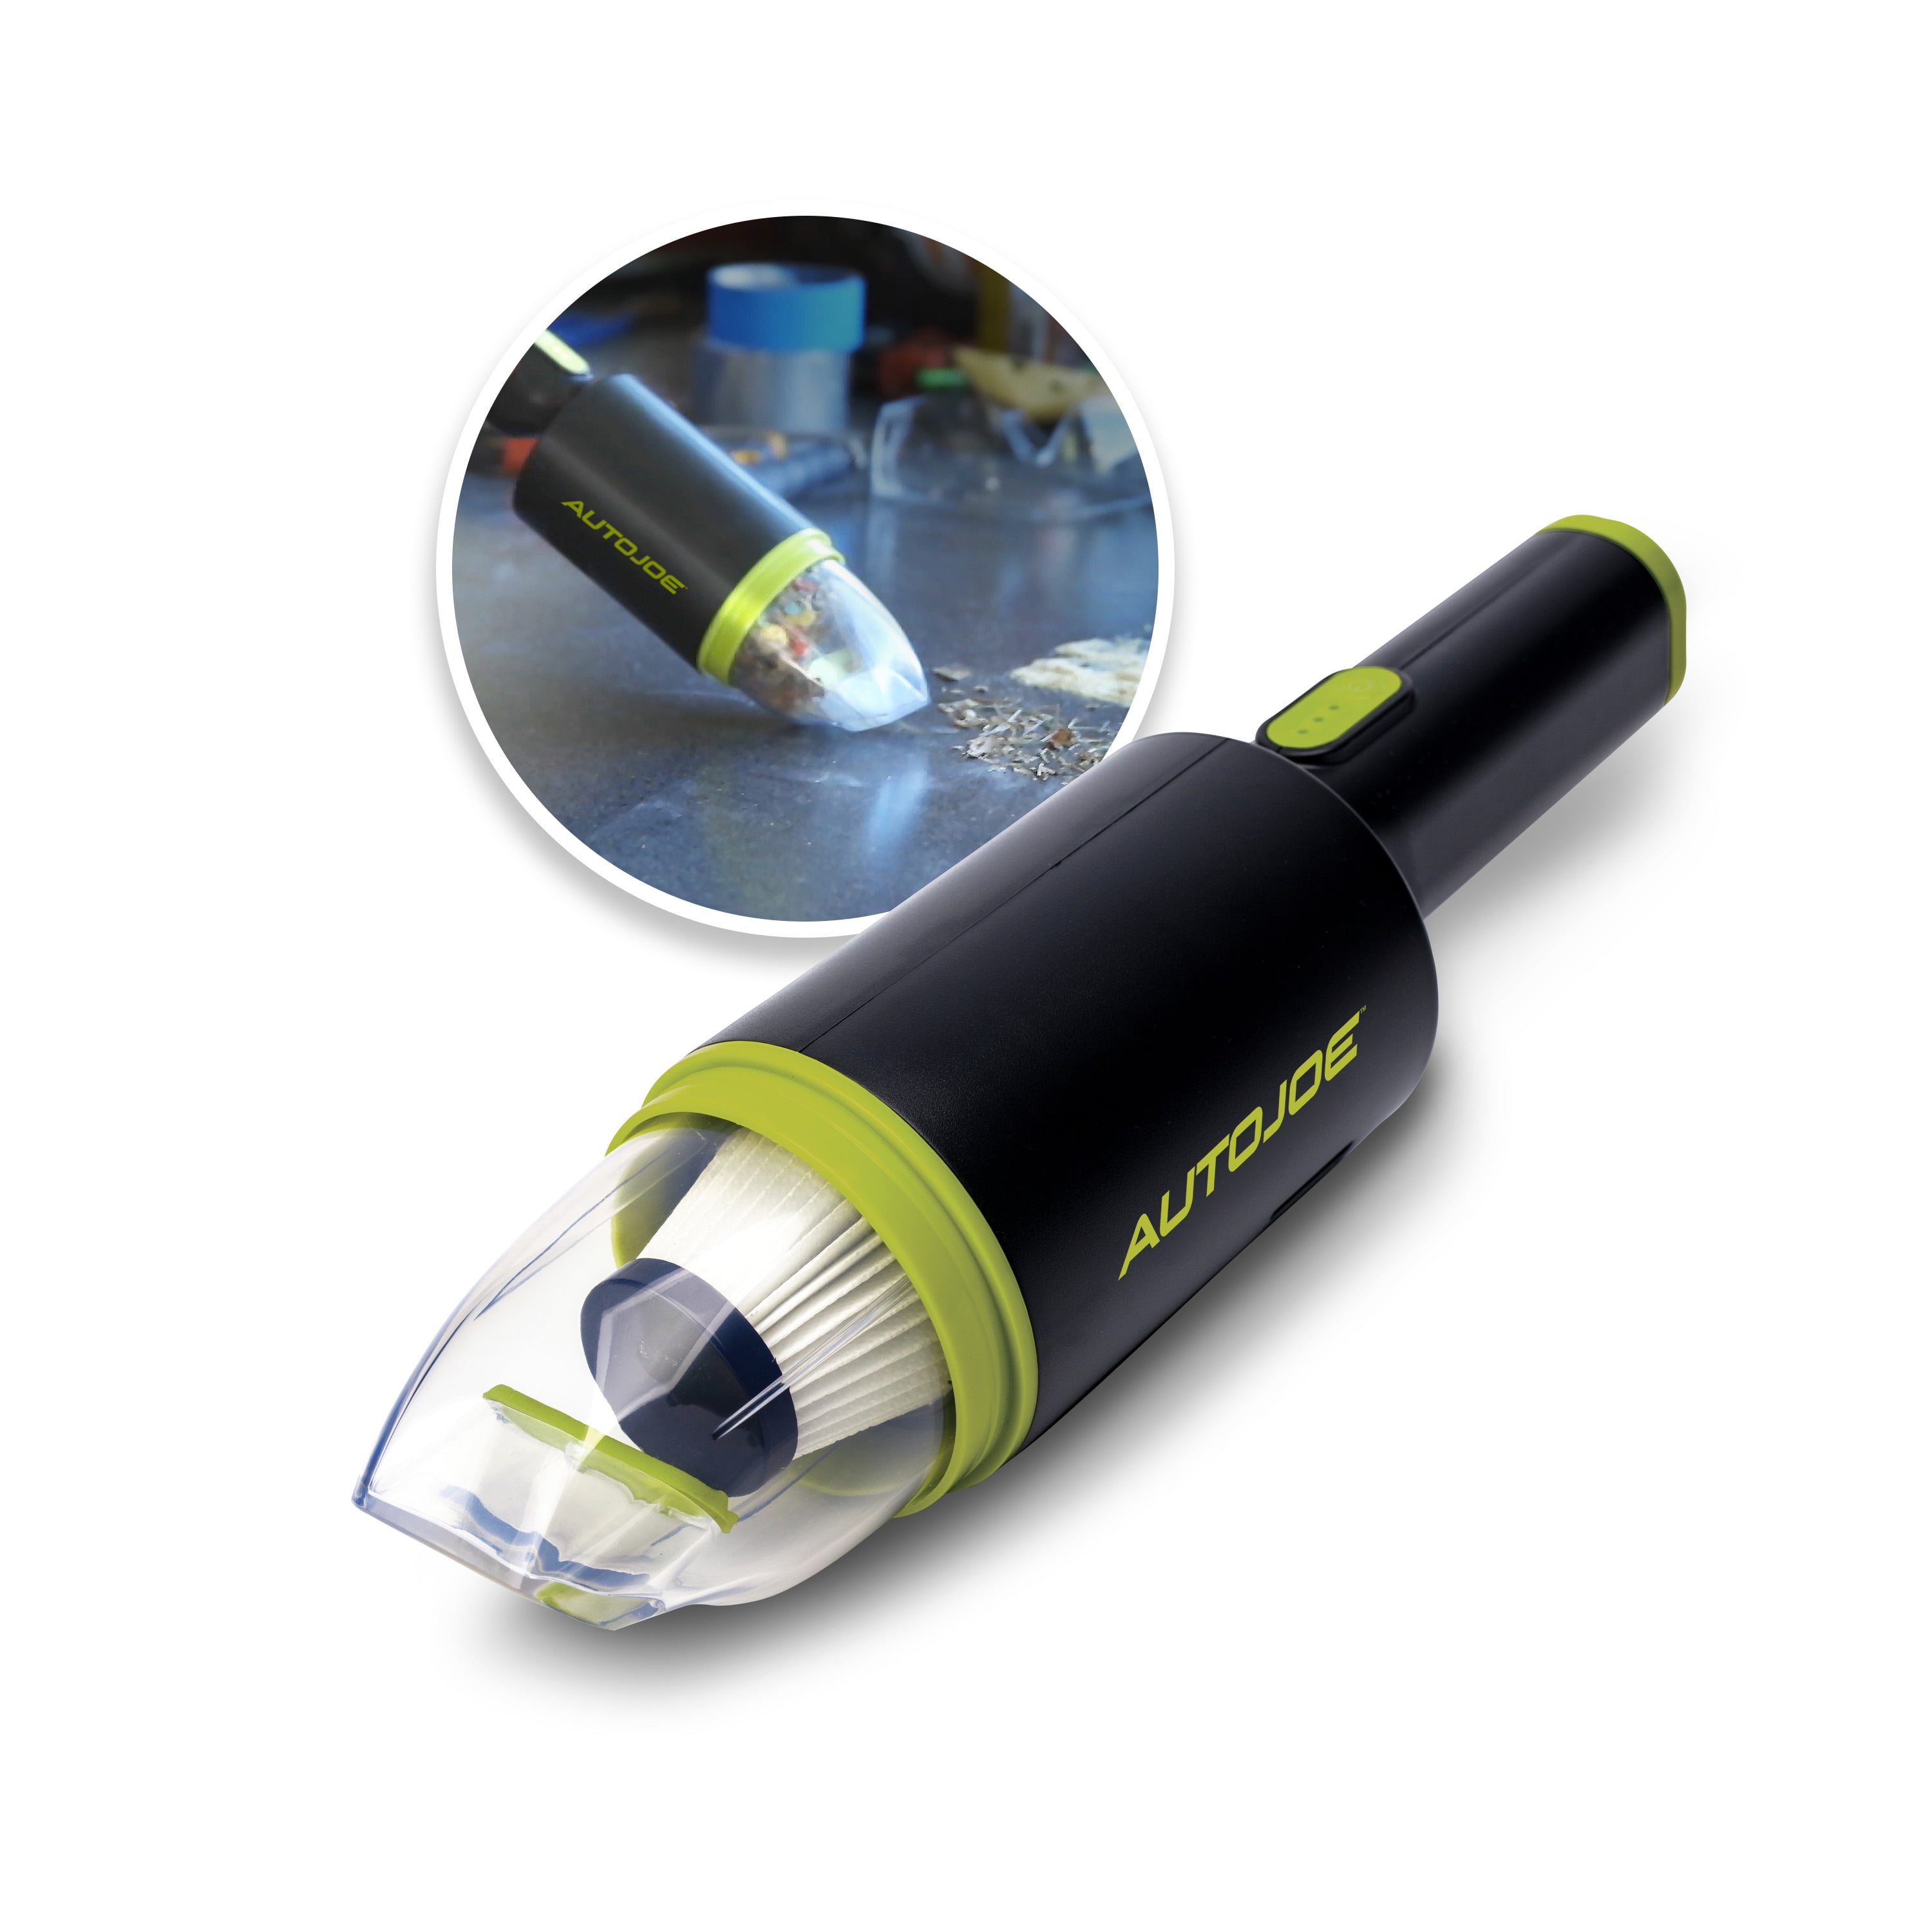 Auto Joe 8.4V Cordless Handheld Vacuum Cleaner w/ HEPA Filter $10